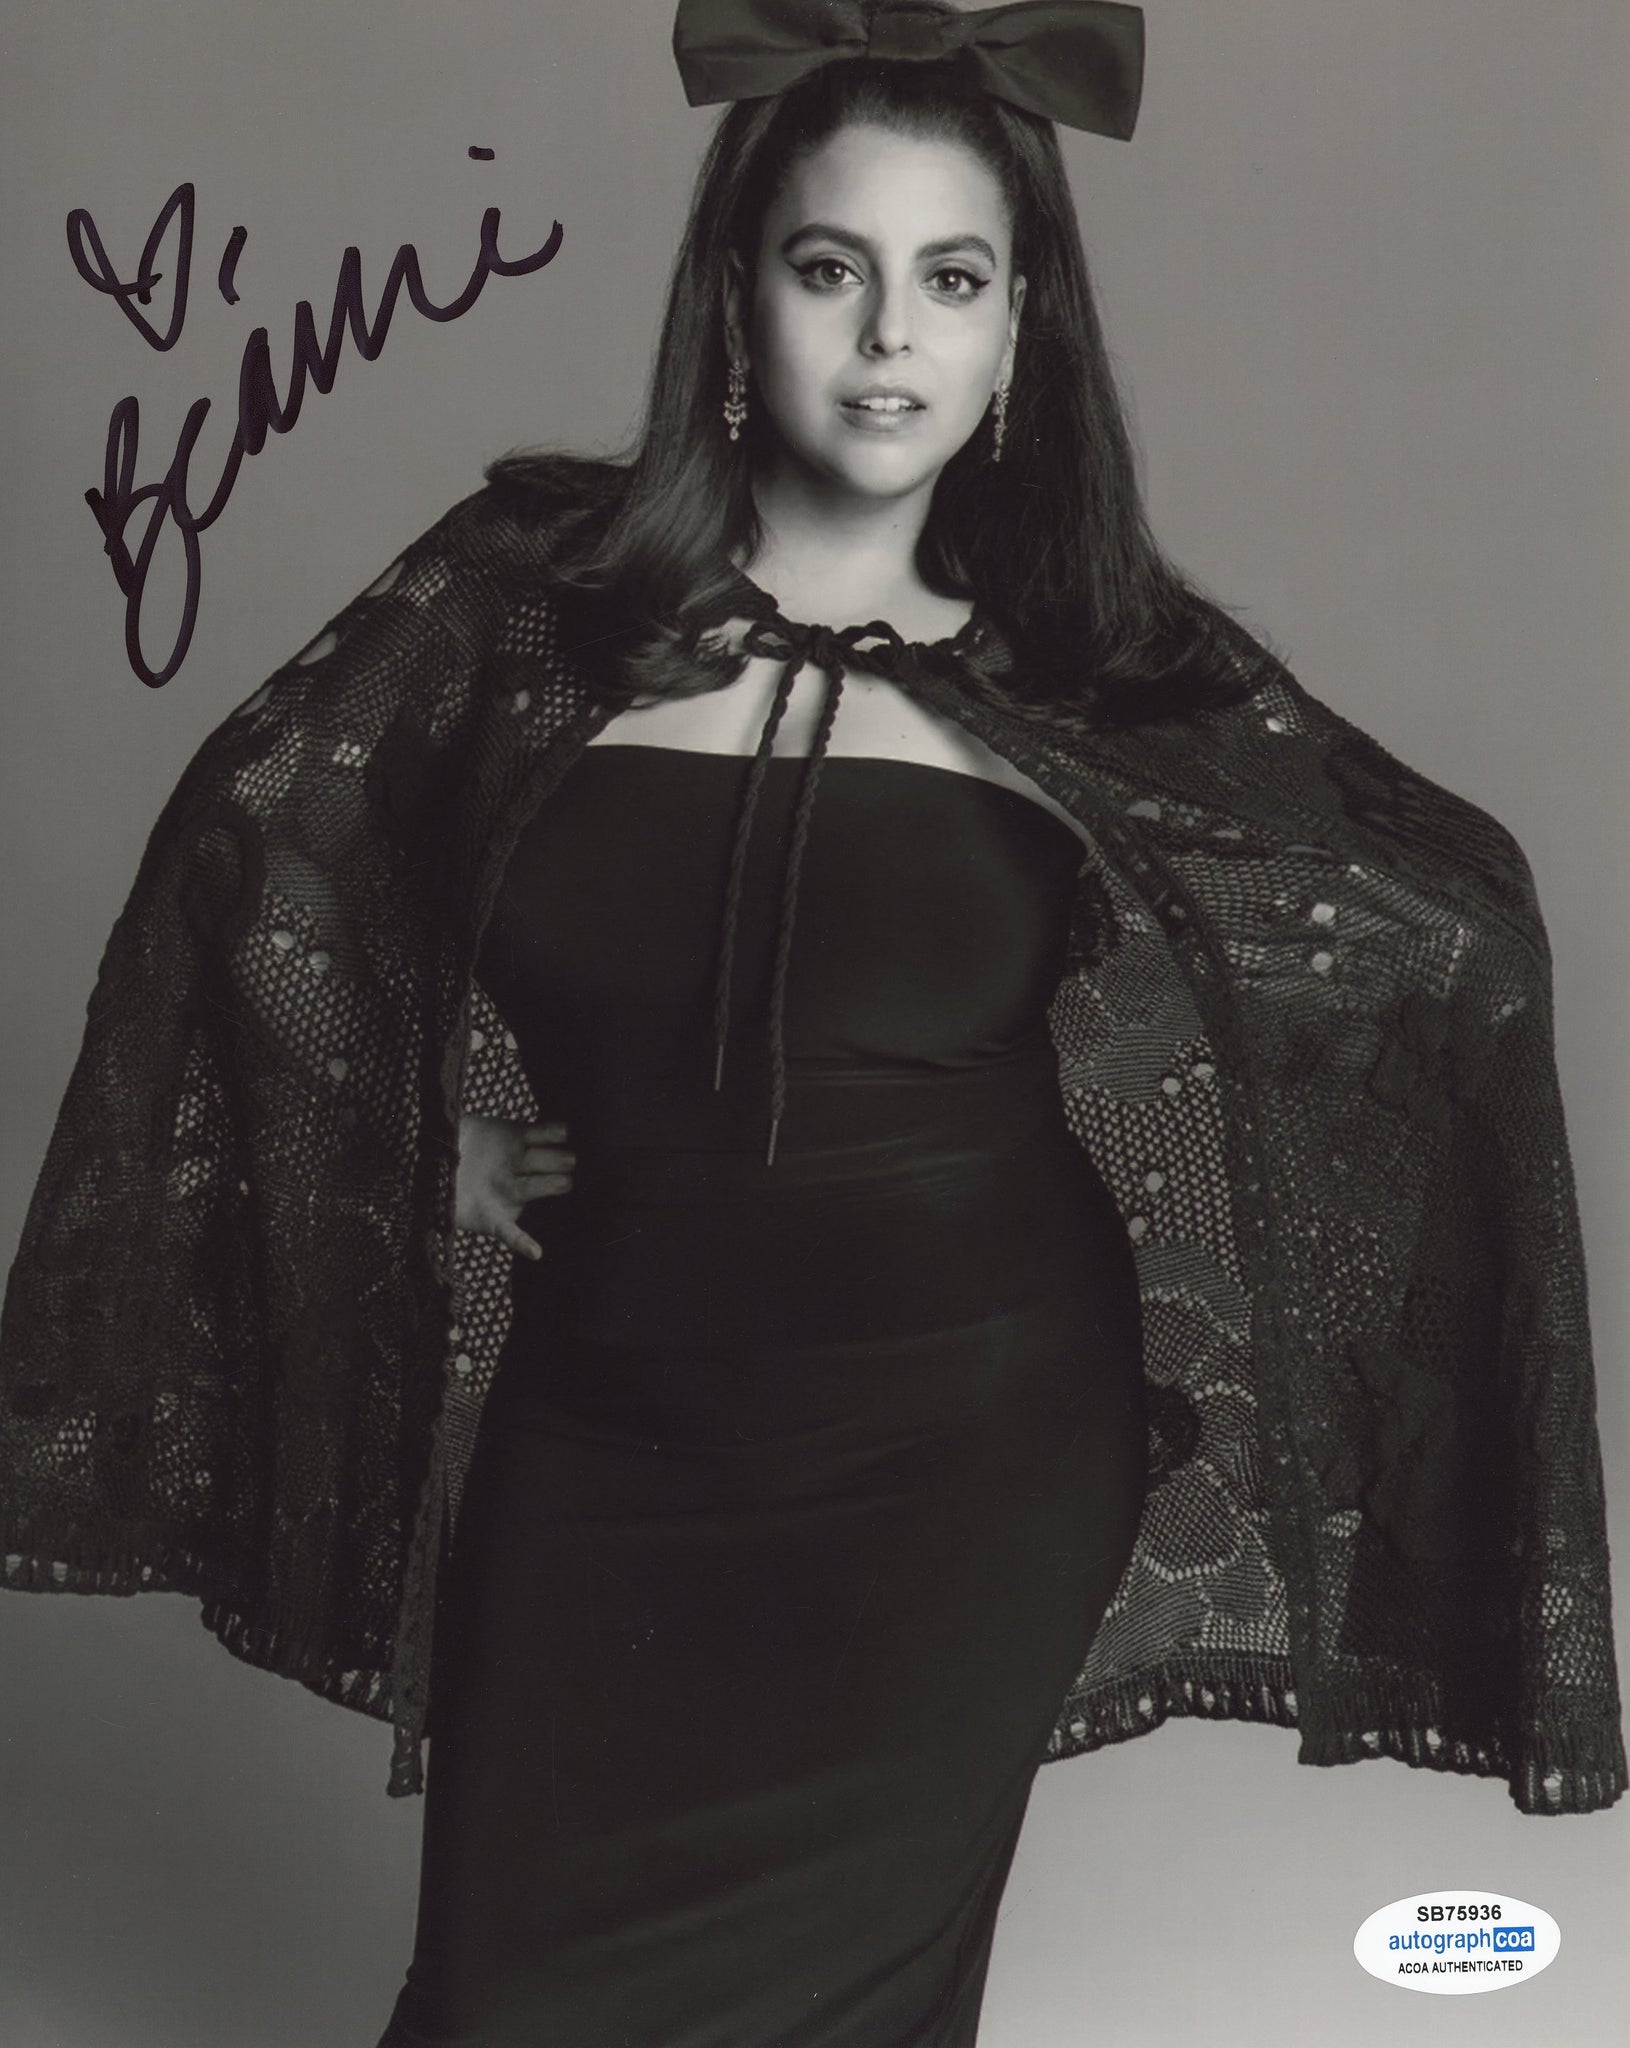 Beanie Feldstein Signed Autograph 8x10 Photo ACOA